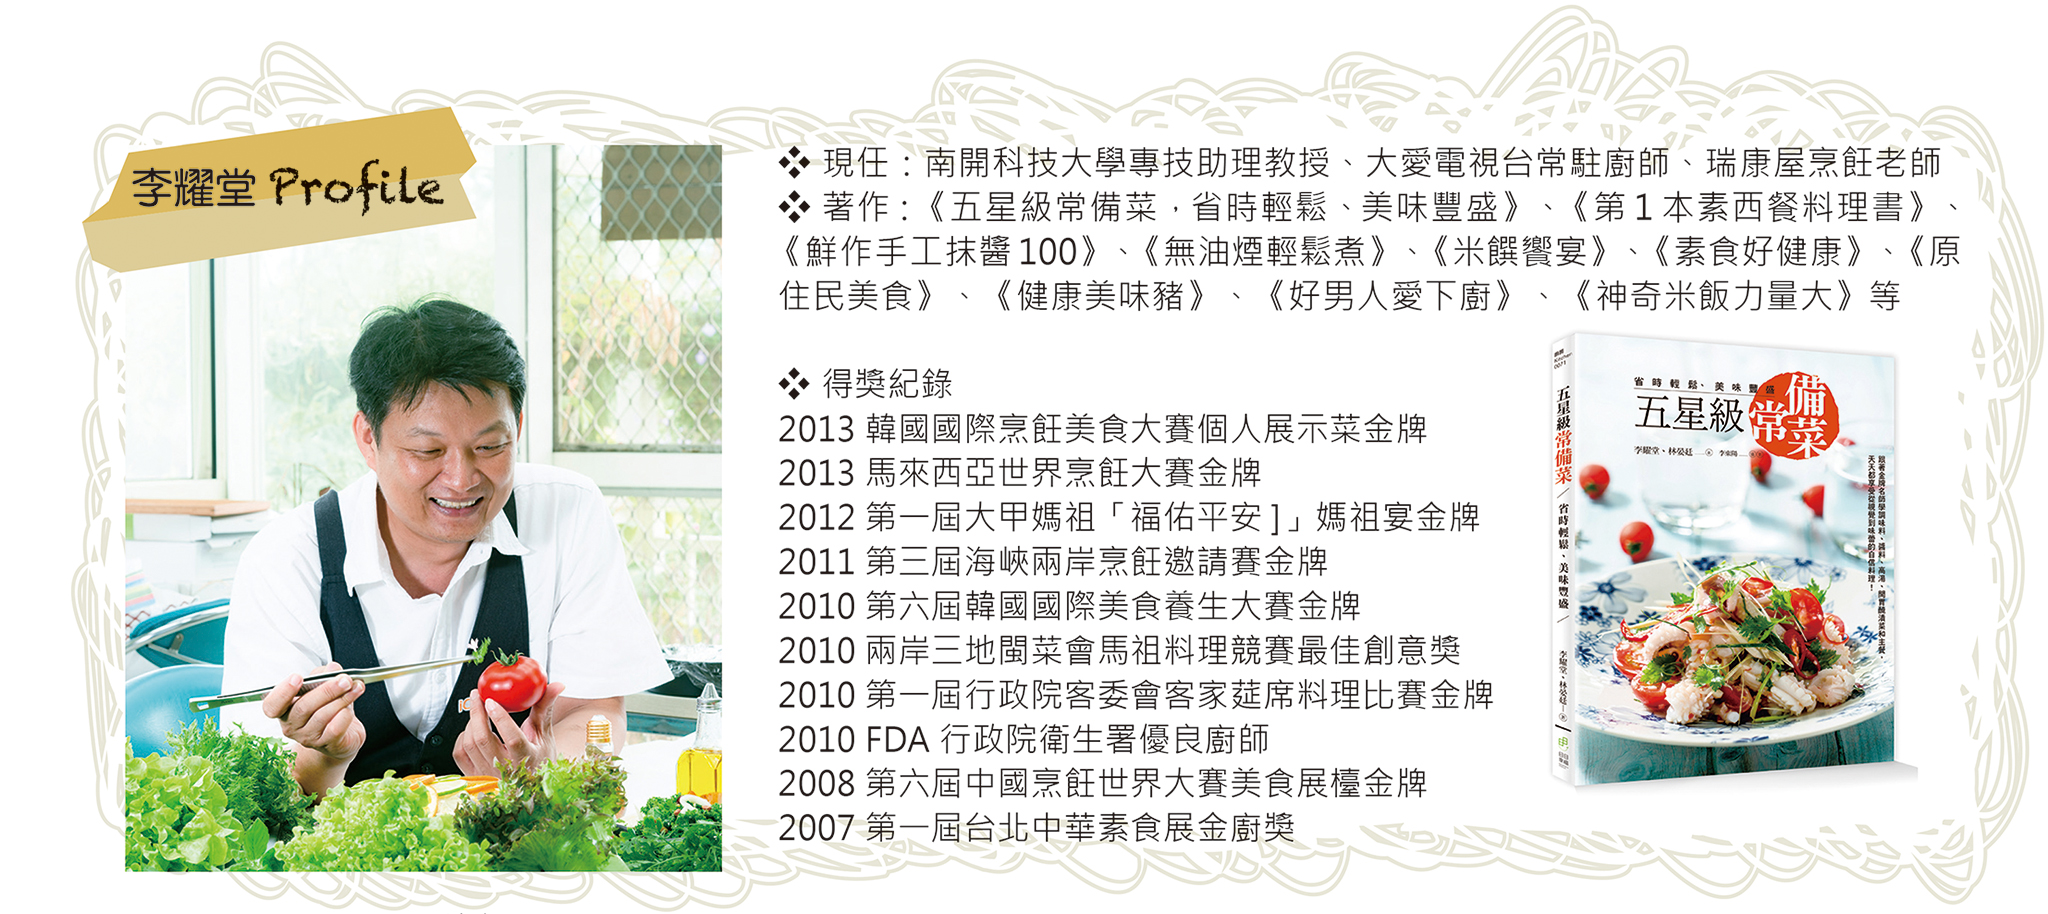 李耀堂Profile。